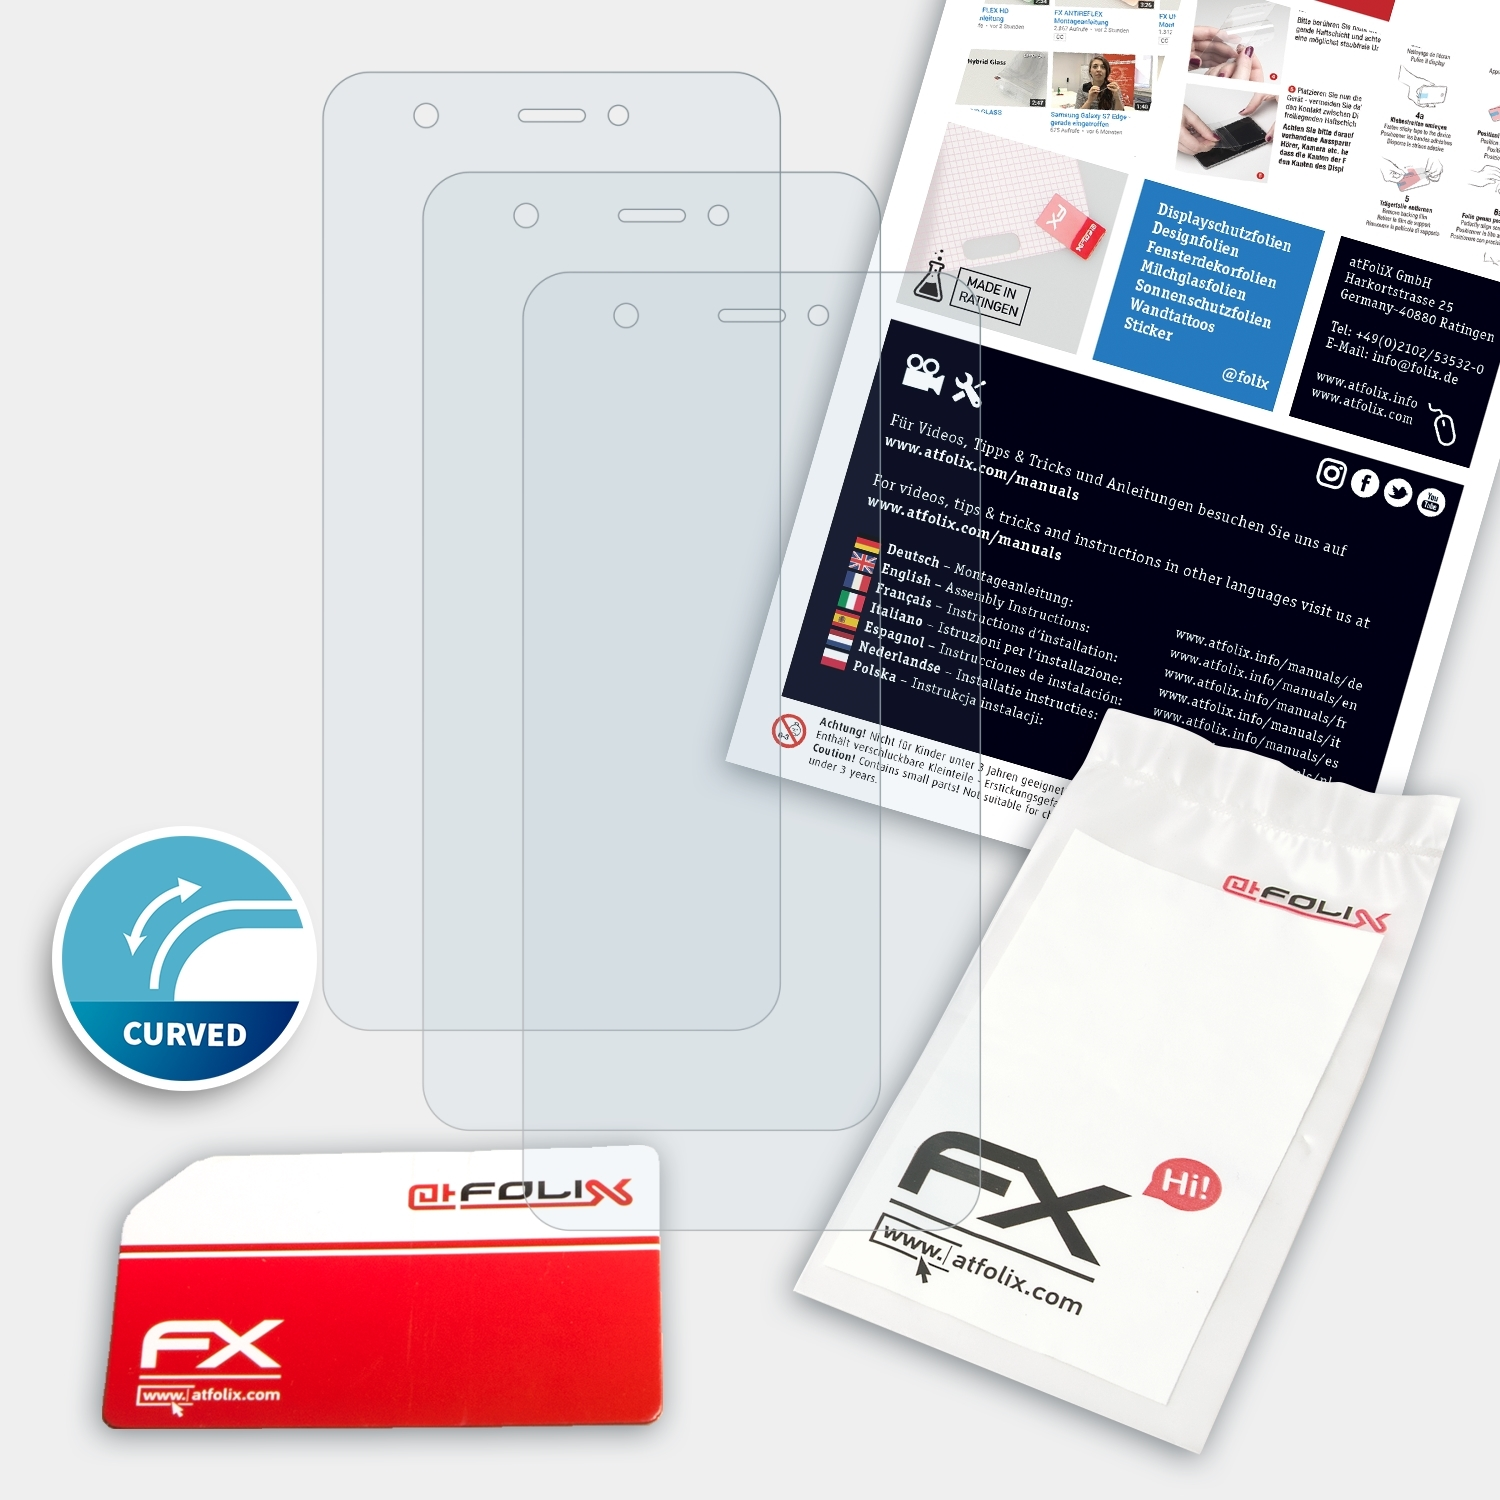 ATFOLIX 3x FX-ActiFleX Displayschutz(für Huawei Nova)